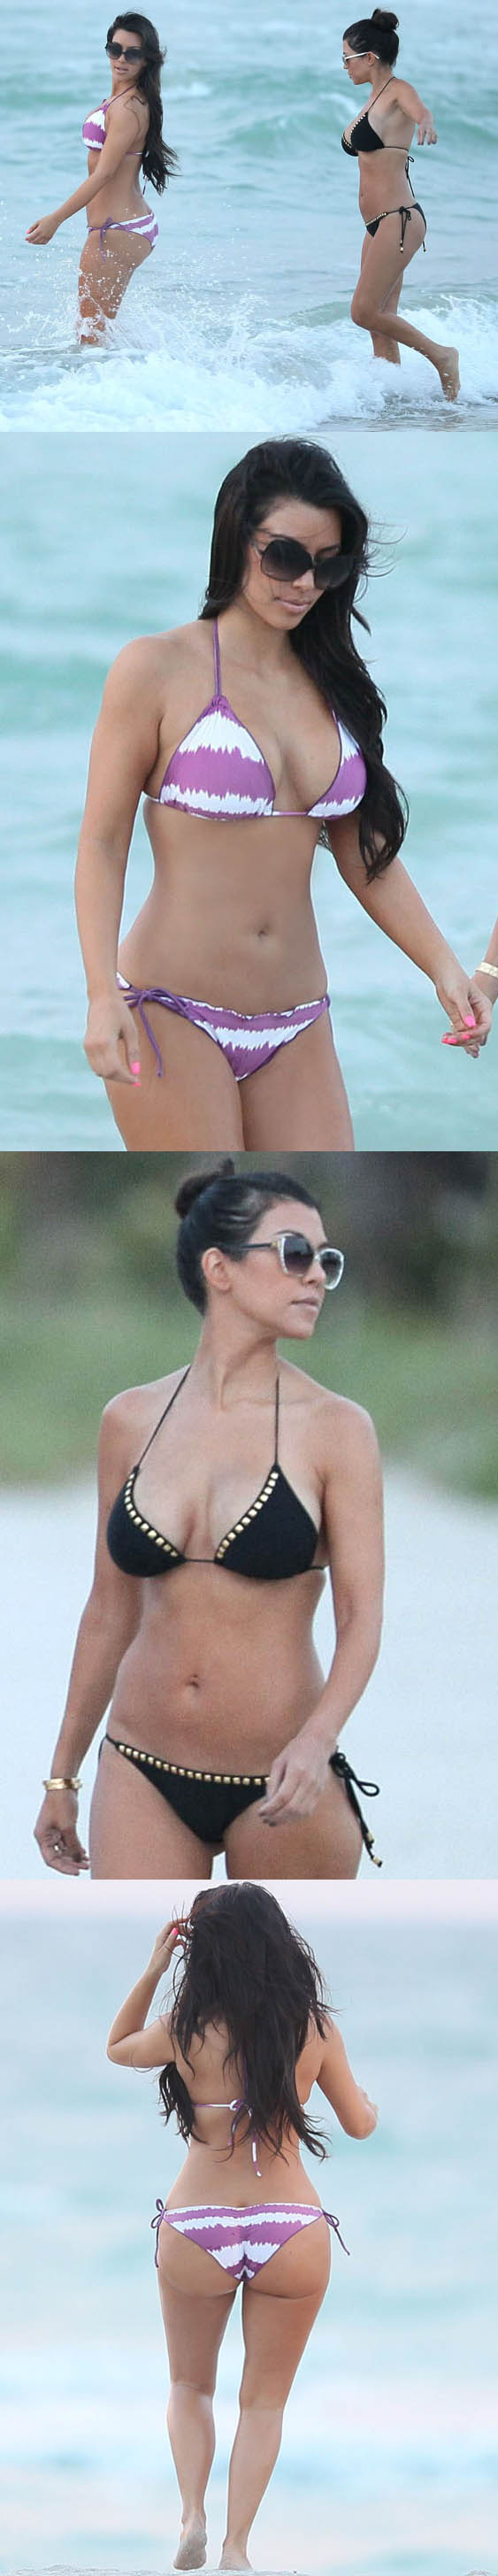 Kim et Kourtney Kardashian en maillot de bain sur la plage de South Beach a Miami